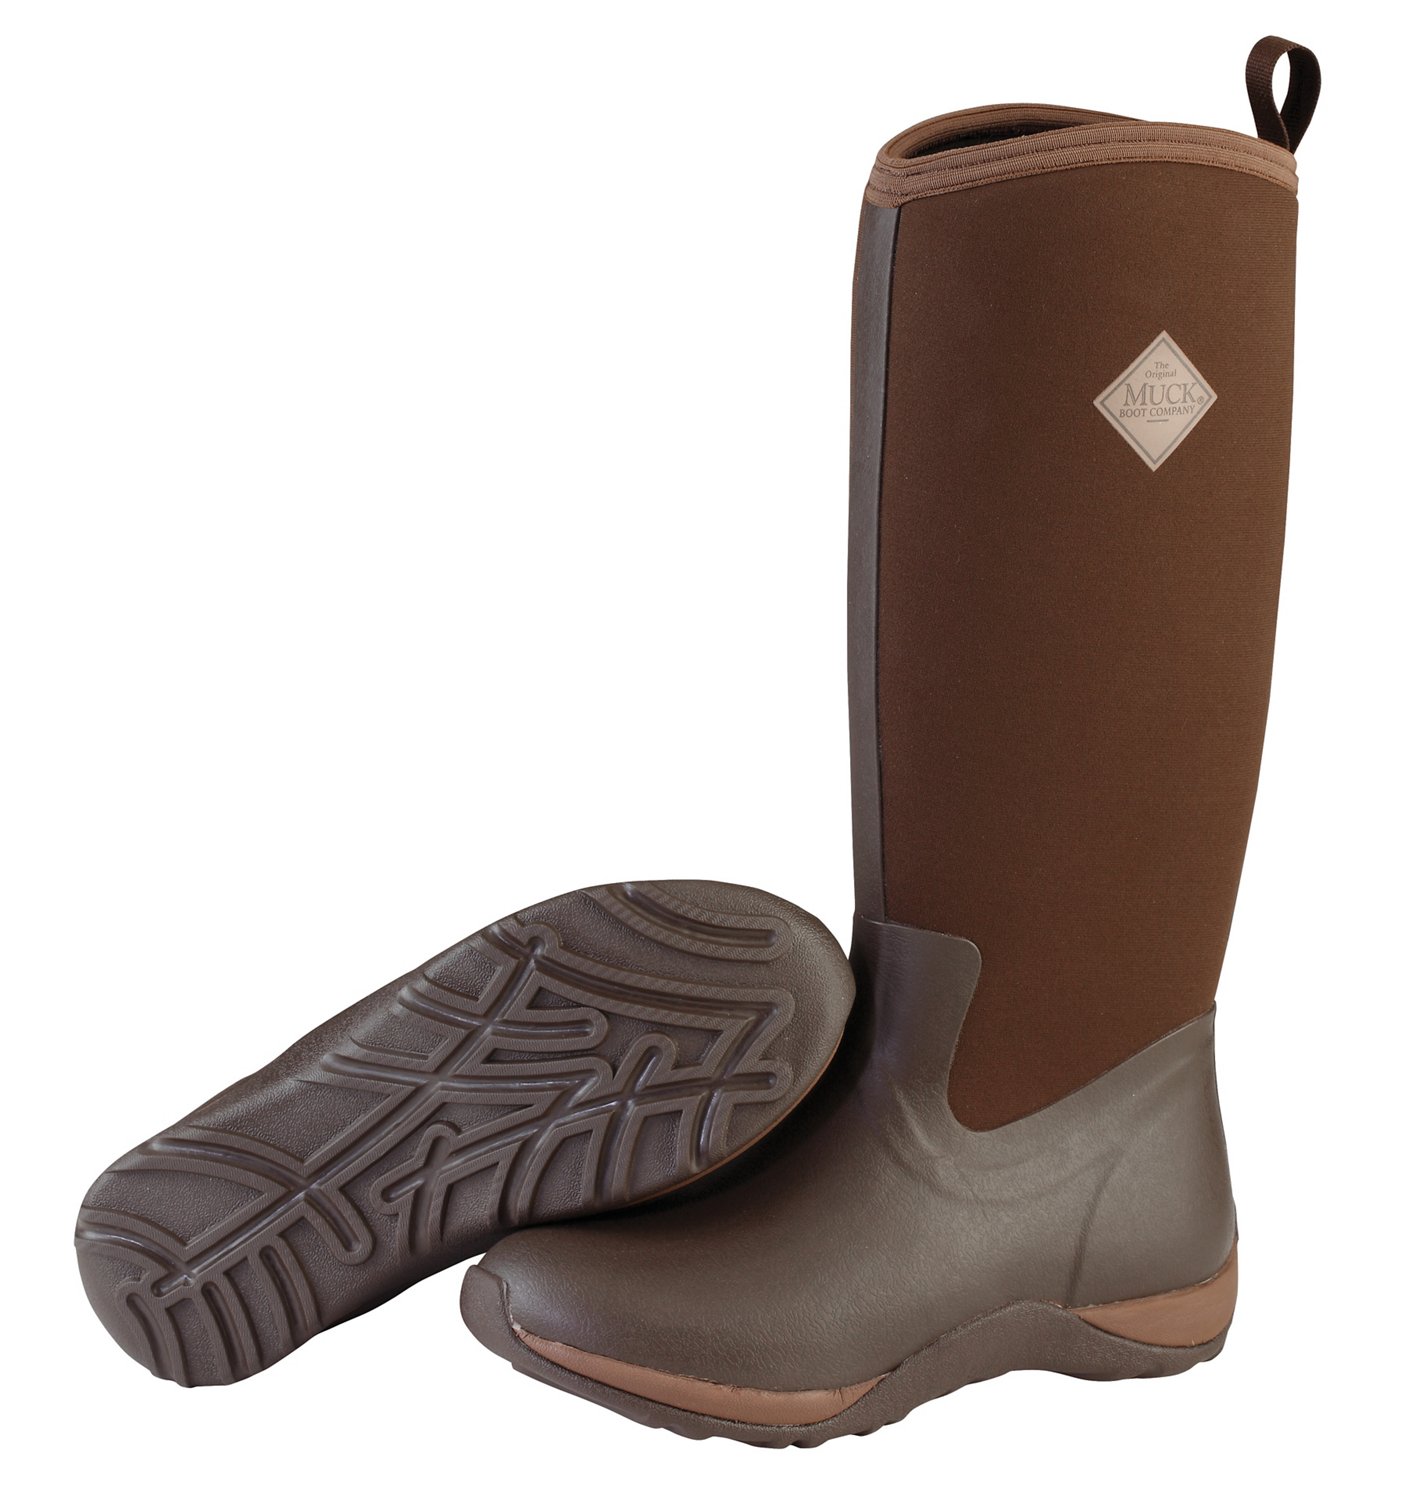 Winter Boots | Warmest & Stylish Winter Boots | Academy